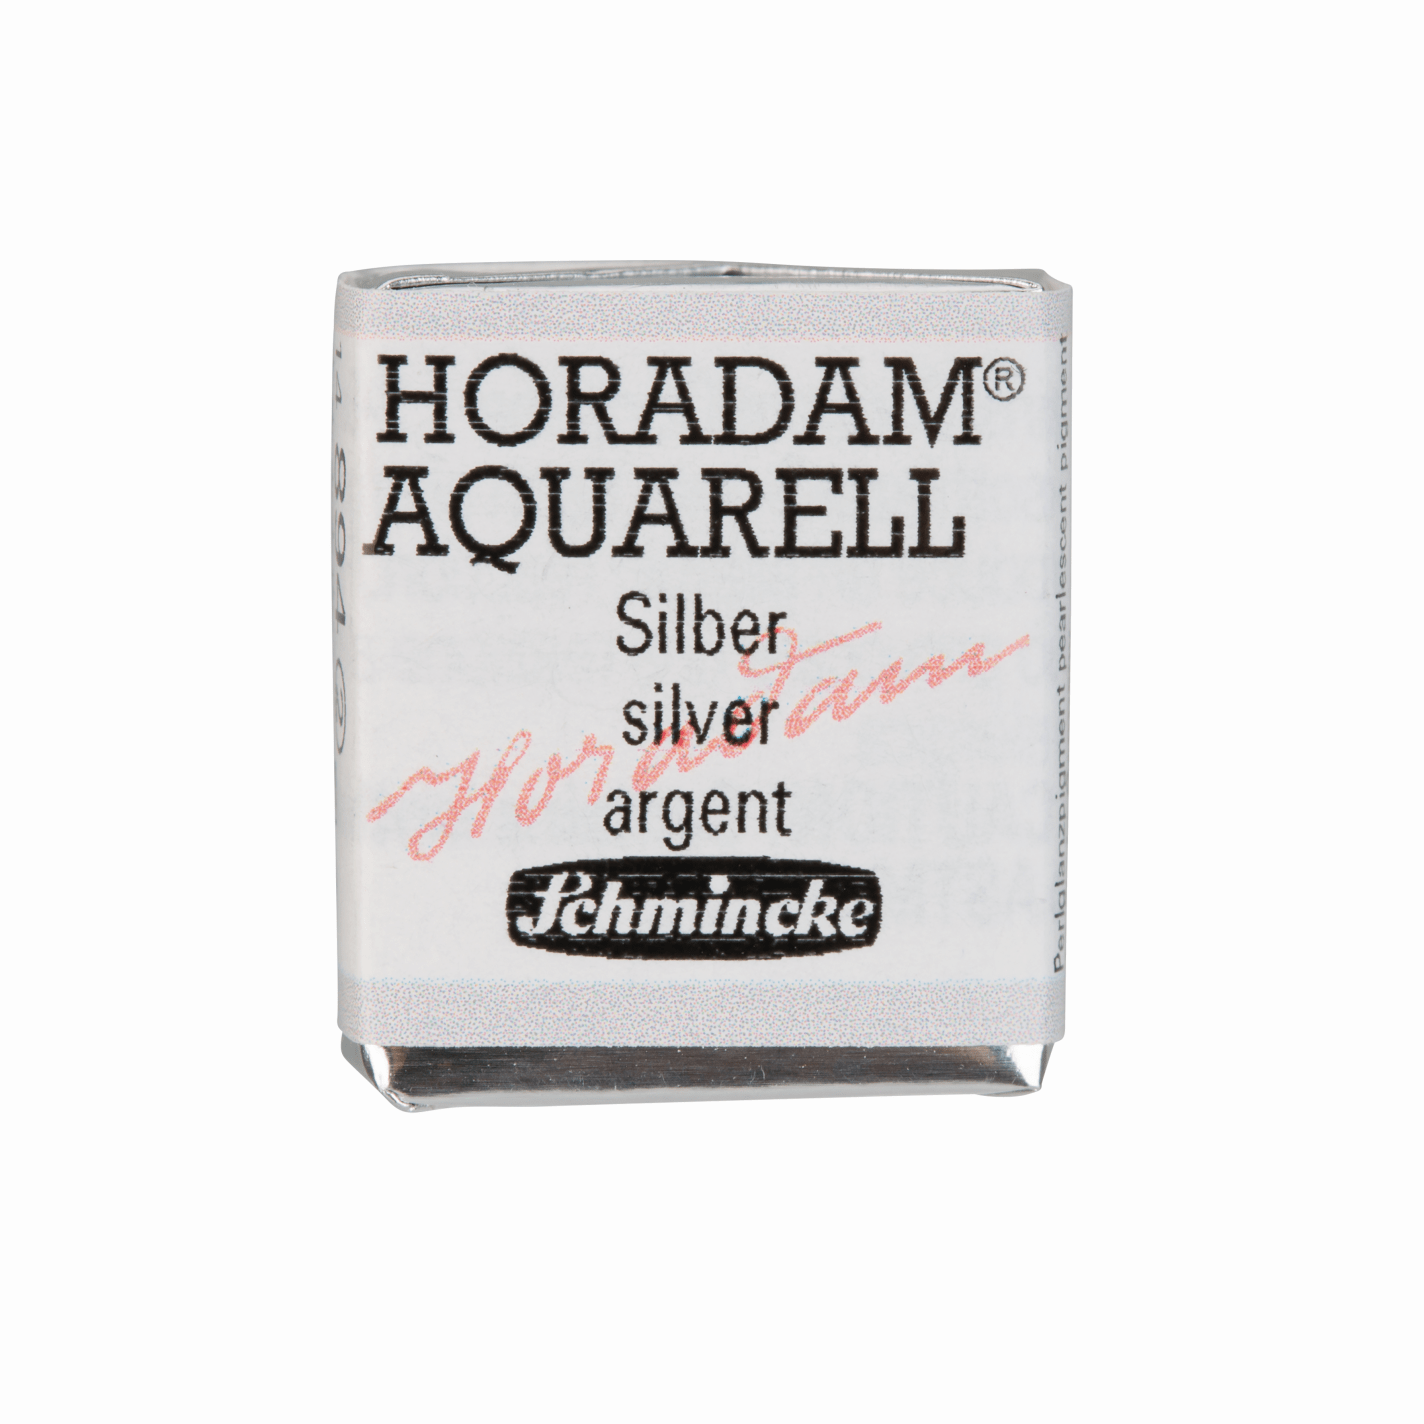 Schmincke Horadam Aquarell pans 1/2 pan Silver